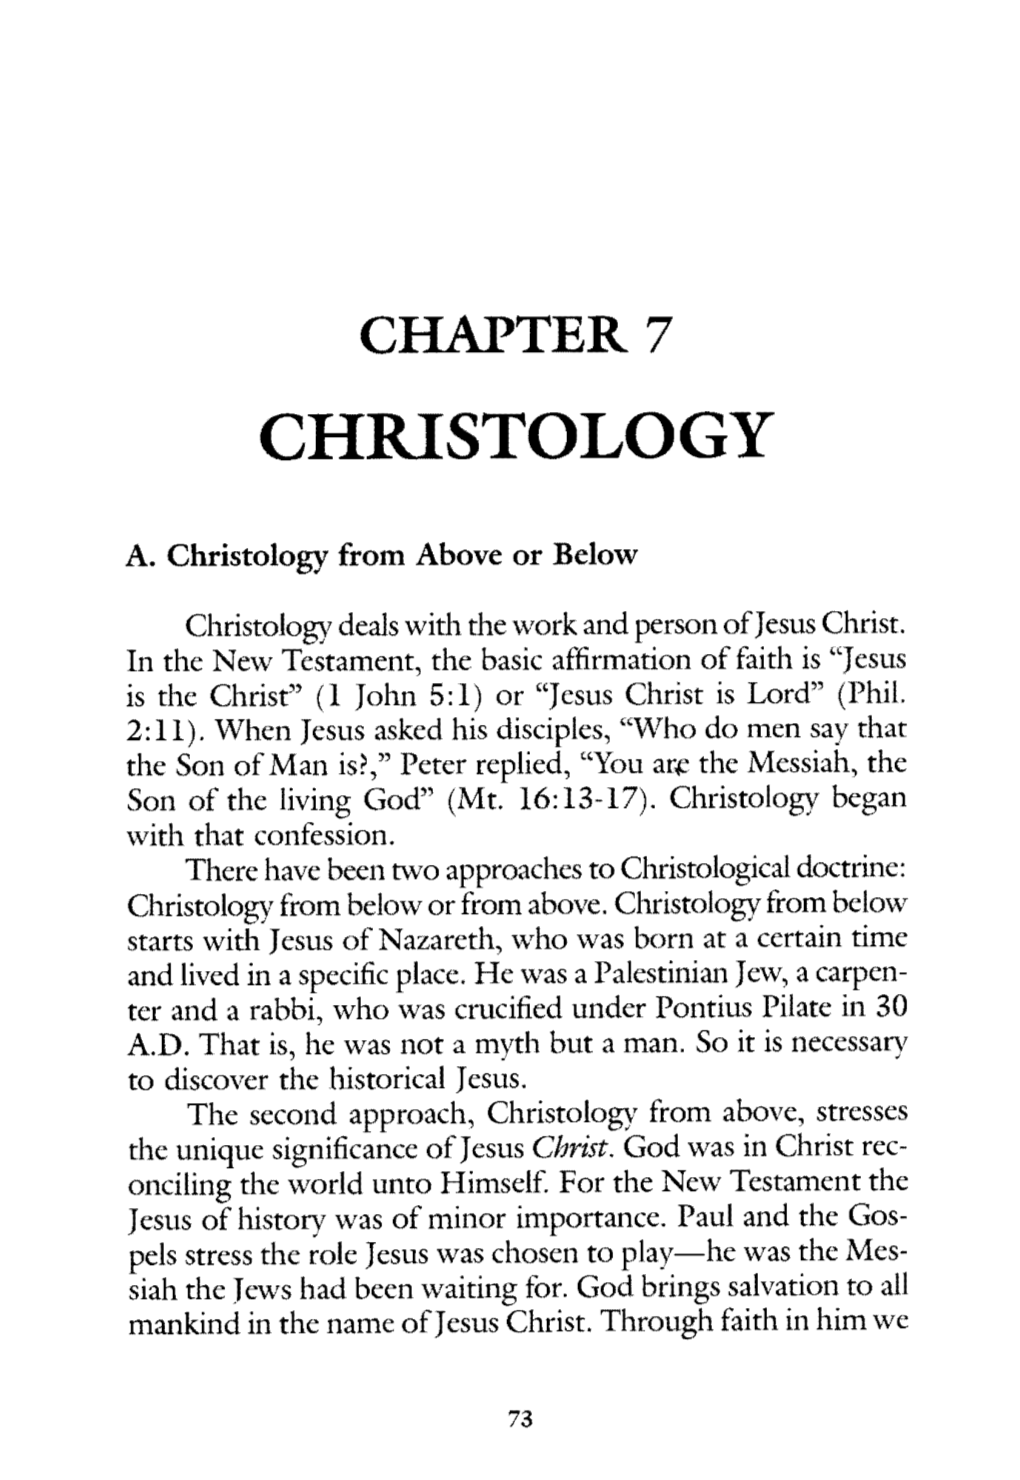 7. Christology